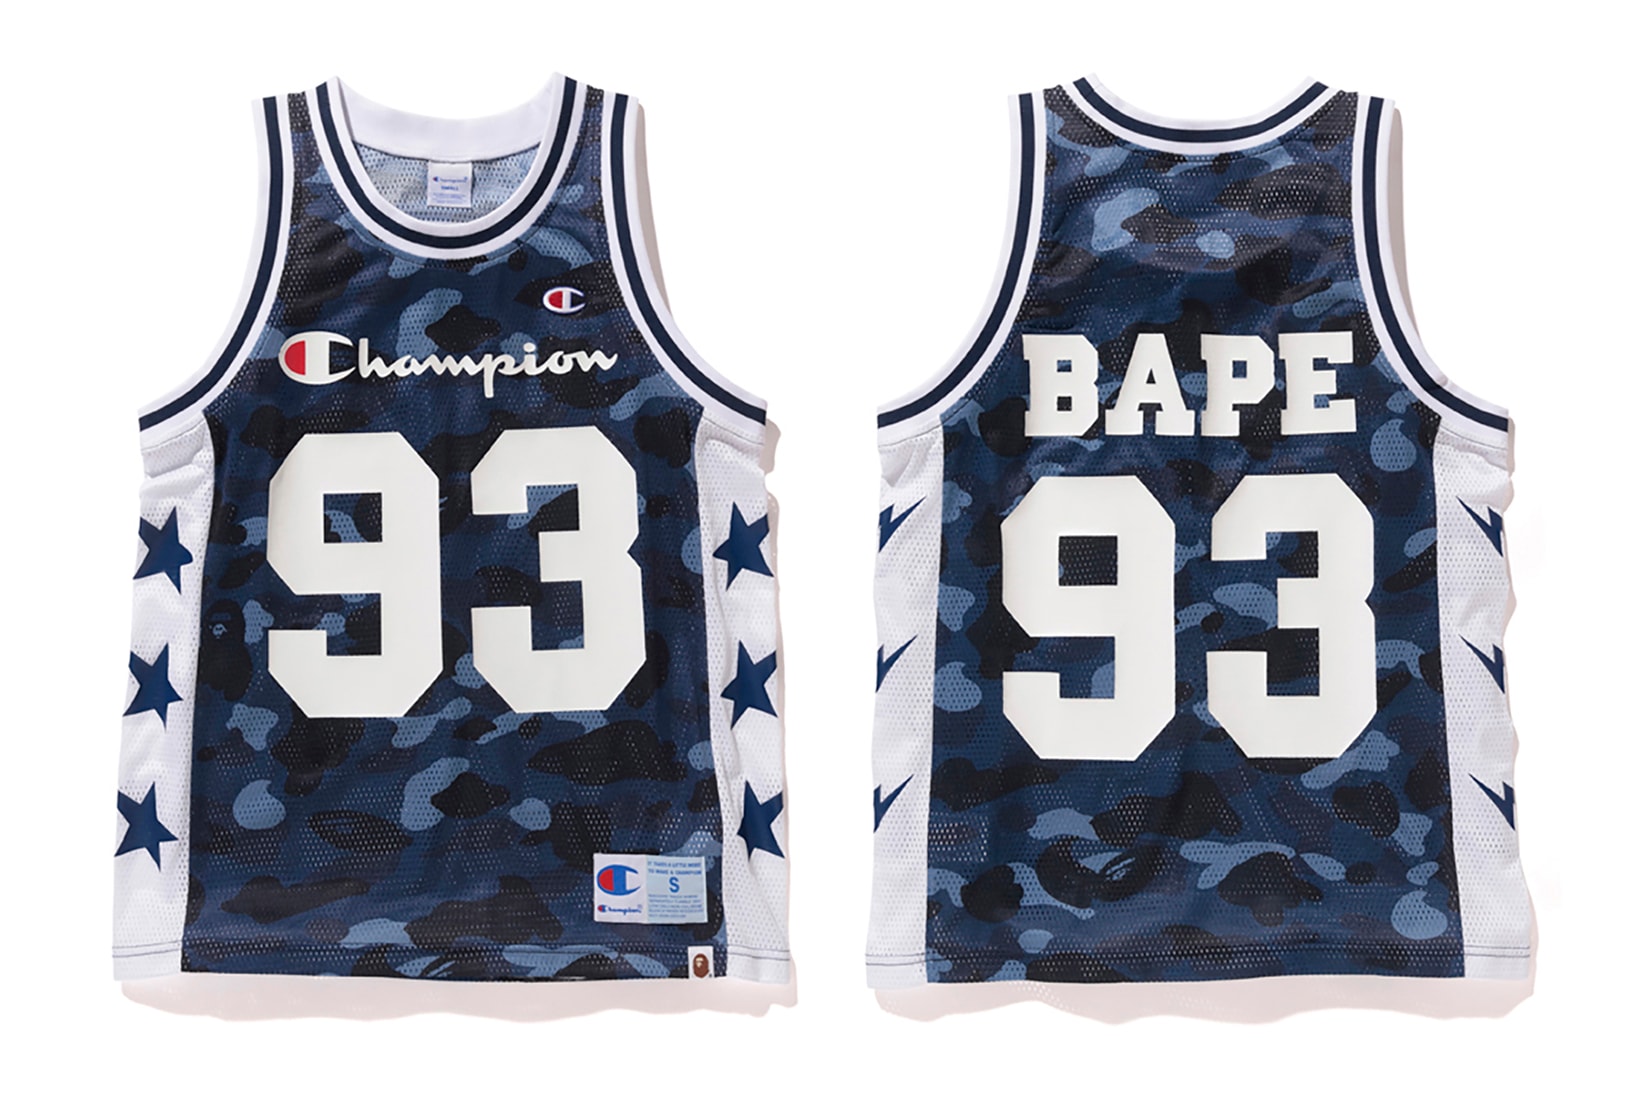 Bape x Champion Blue Camouflage Basketball Vest